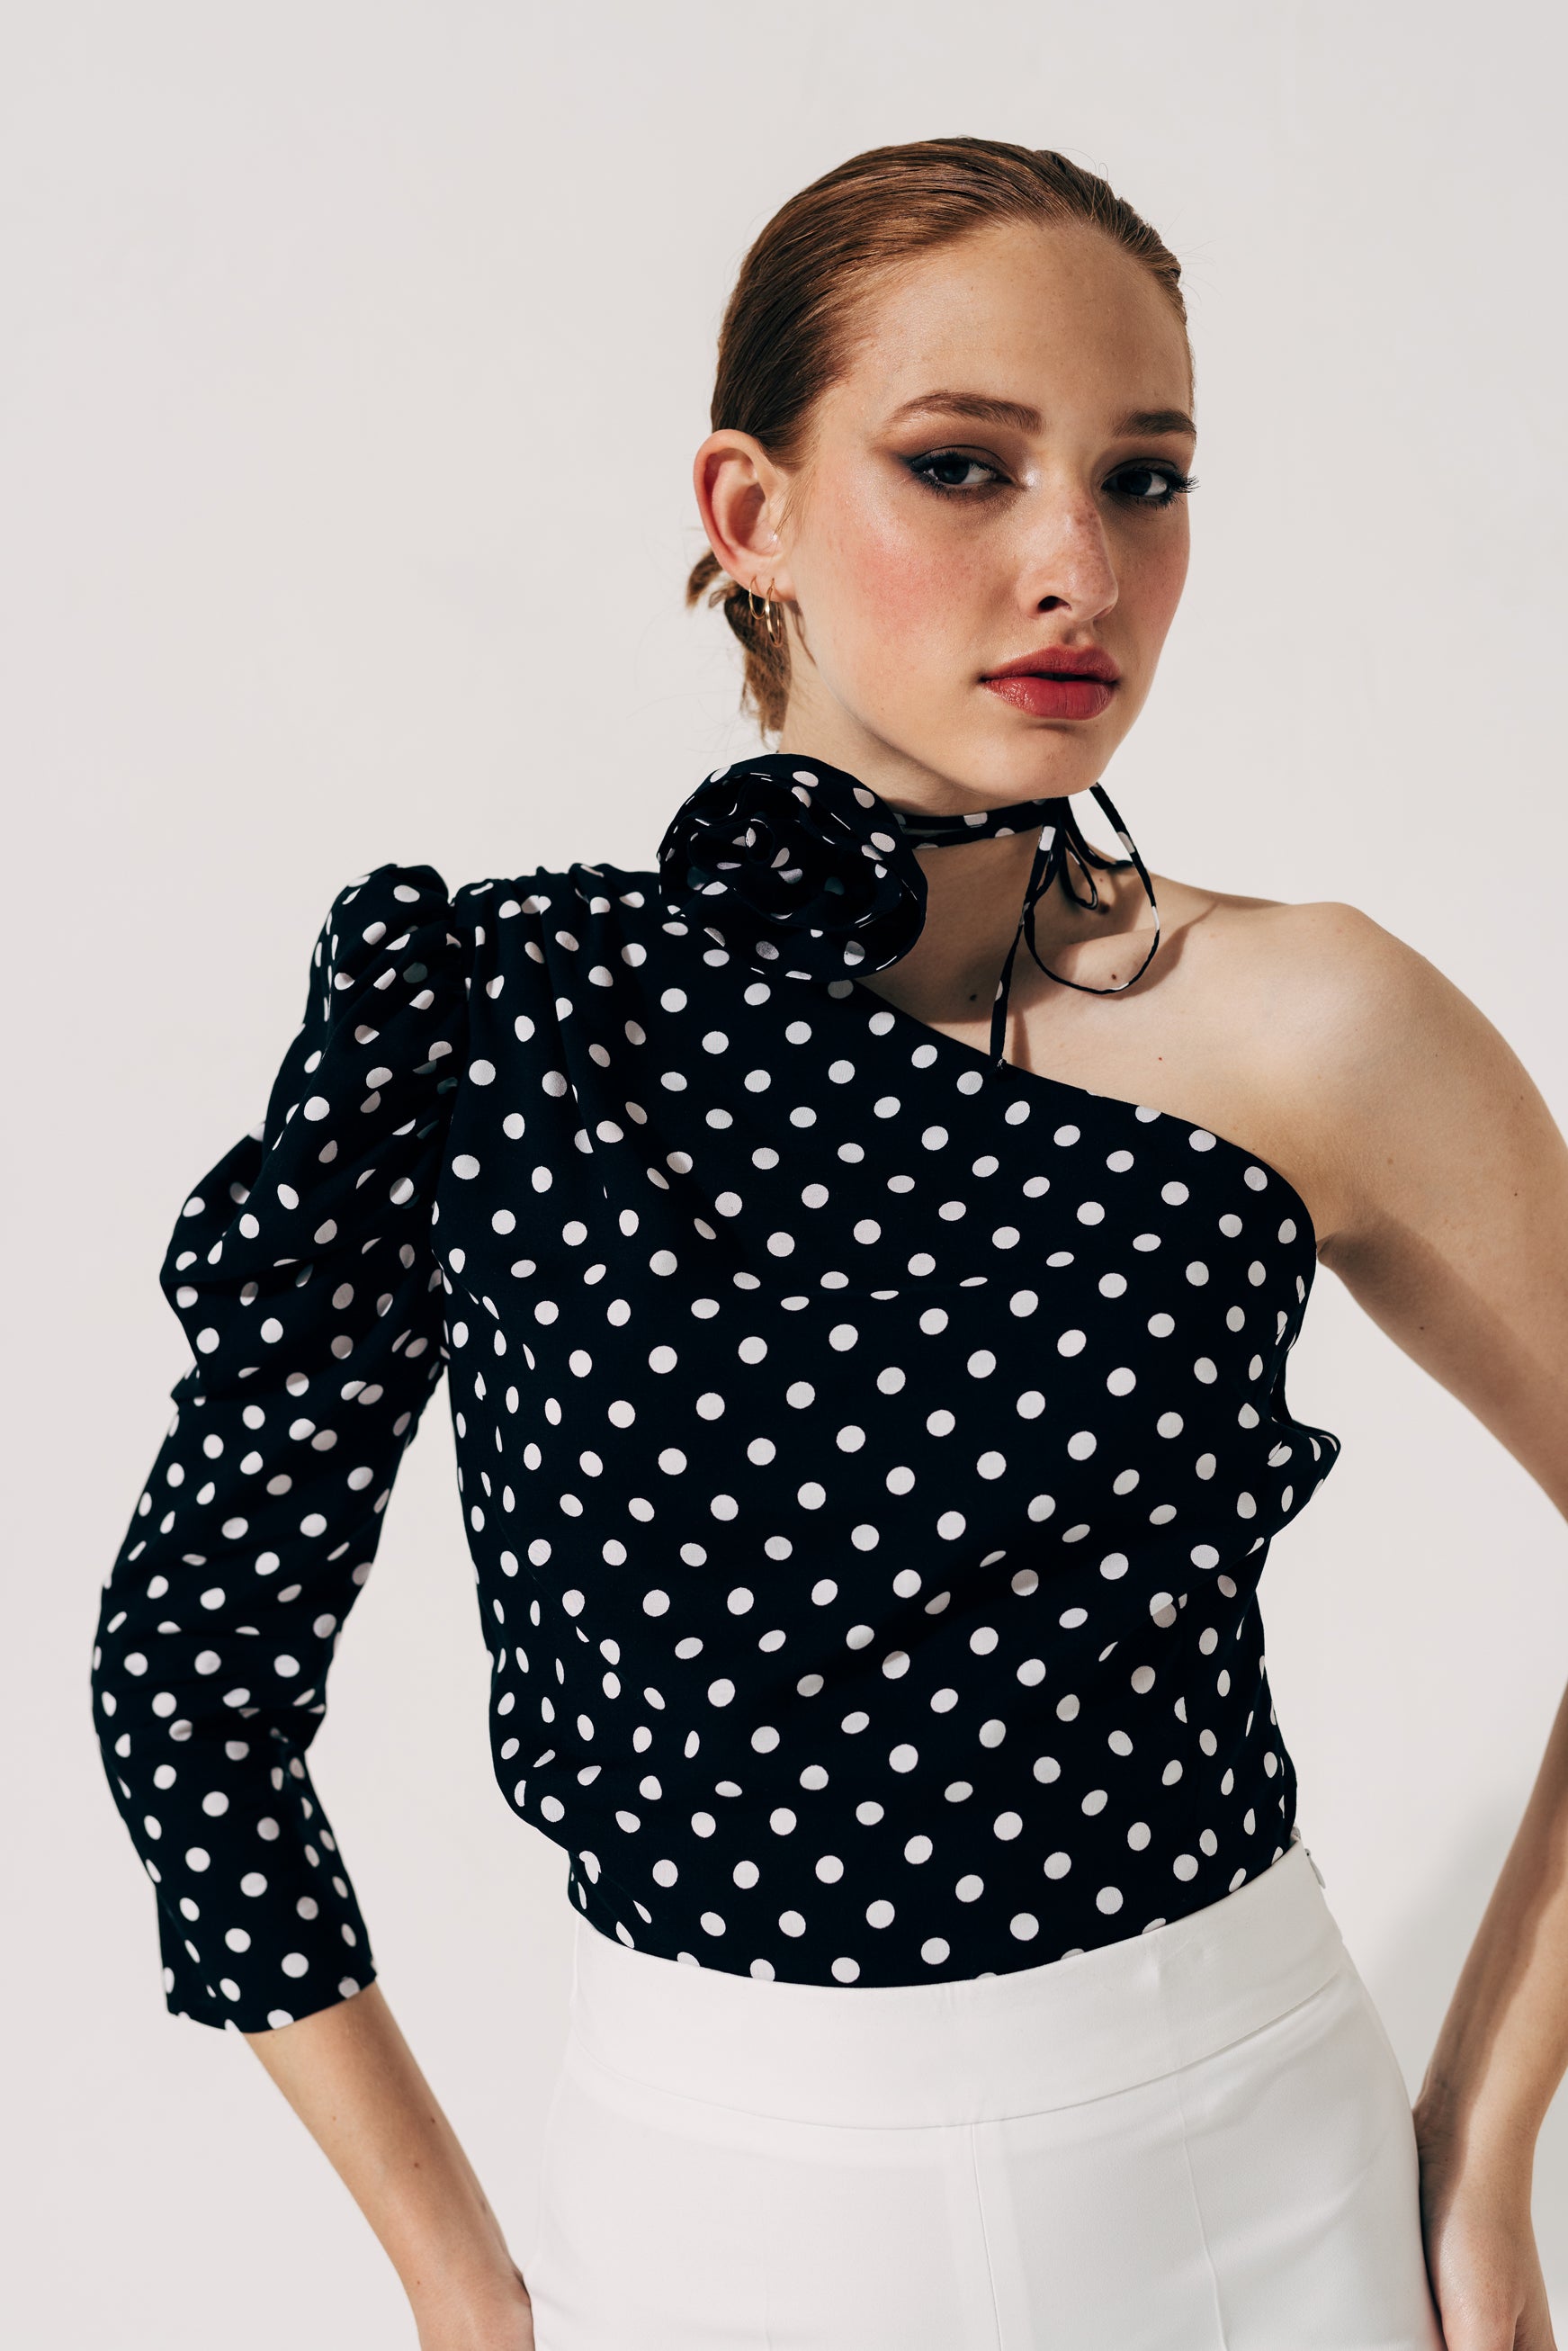 100% Viscose polka dot blouse with floral applique